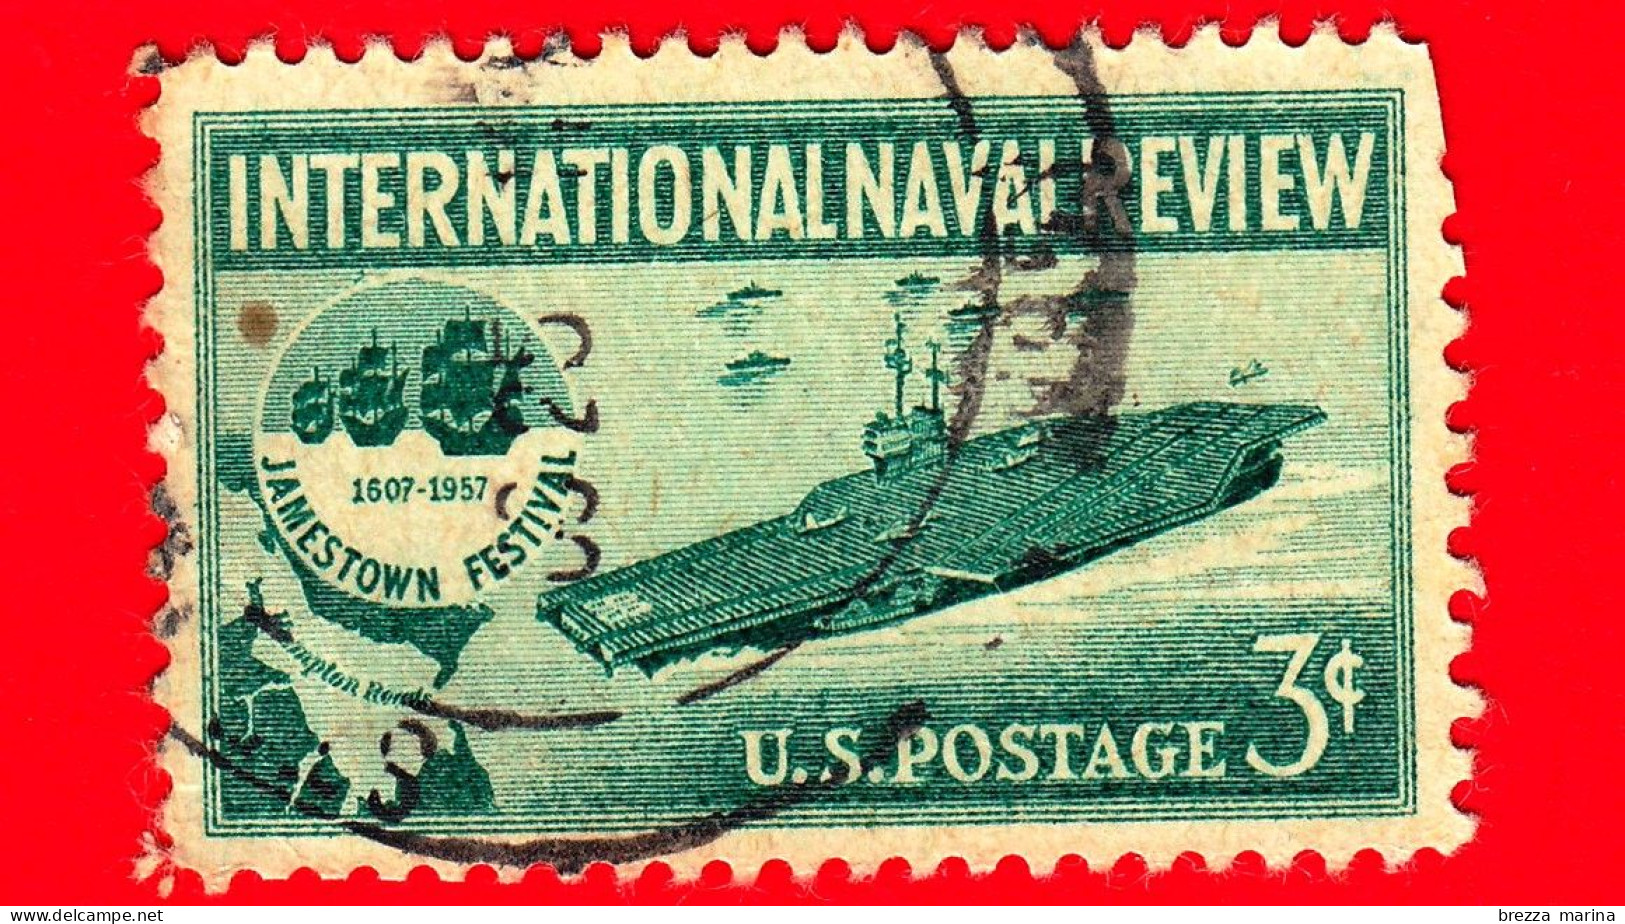 USA - STATI UNITI - Usato - 1957 - Rassegna Navale Internazionale - Portaerei Ed Emblema Del Jamestown Festival - 3 - Gebruikt